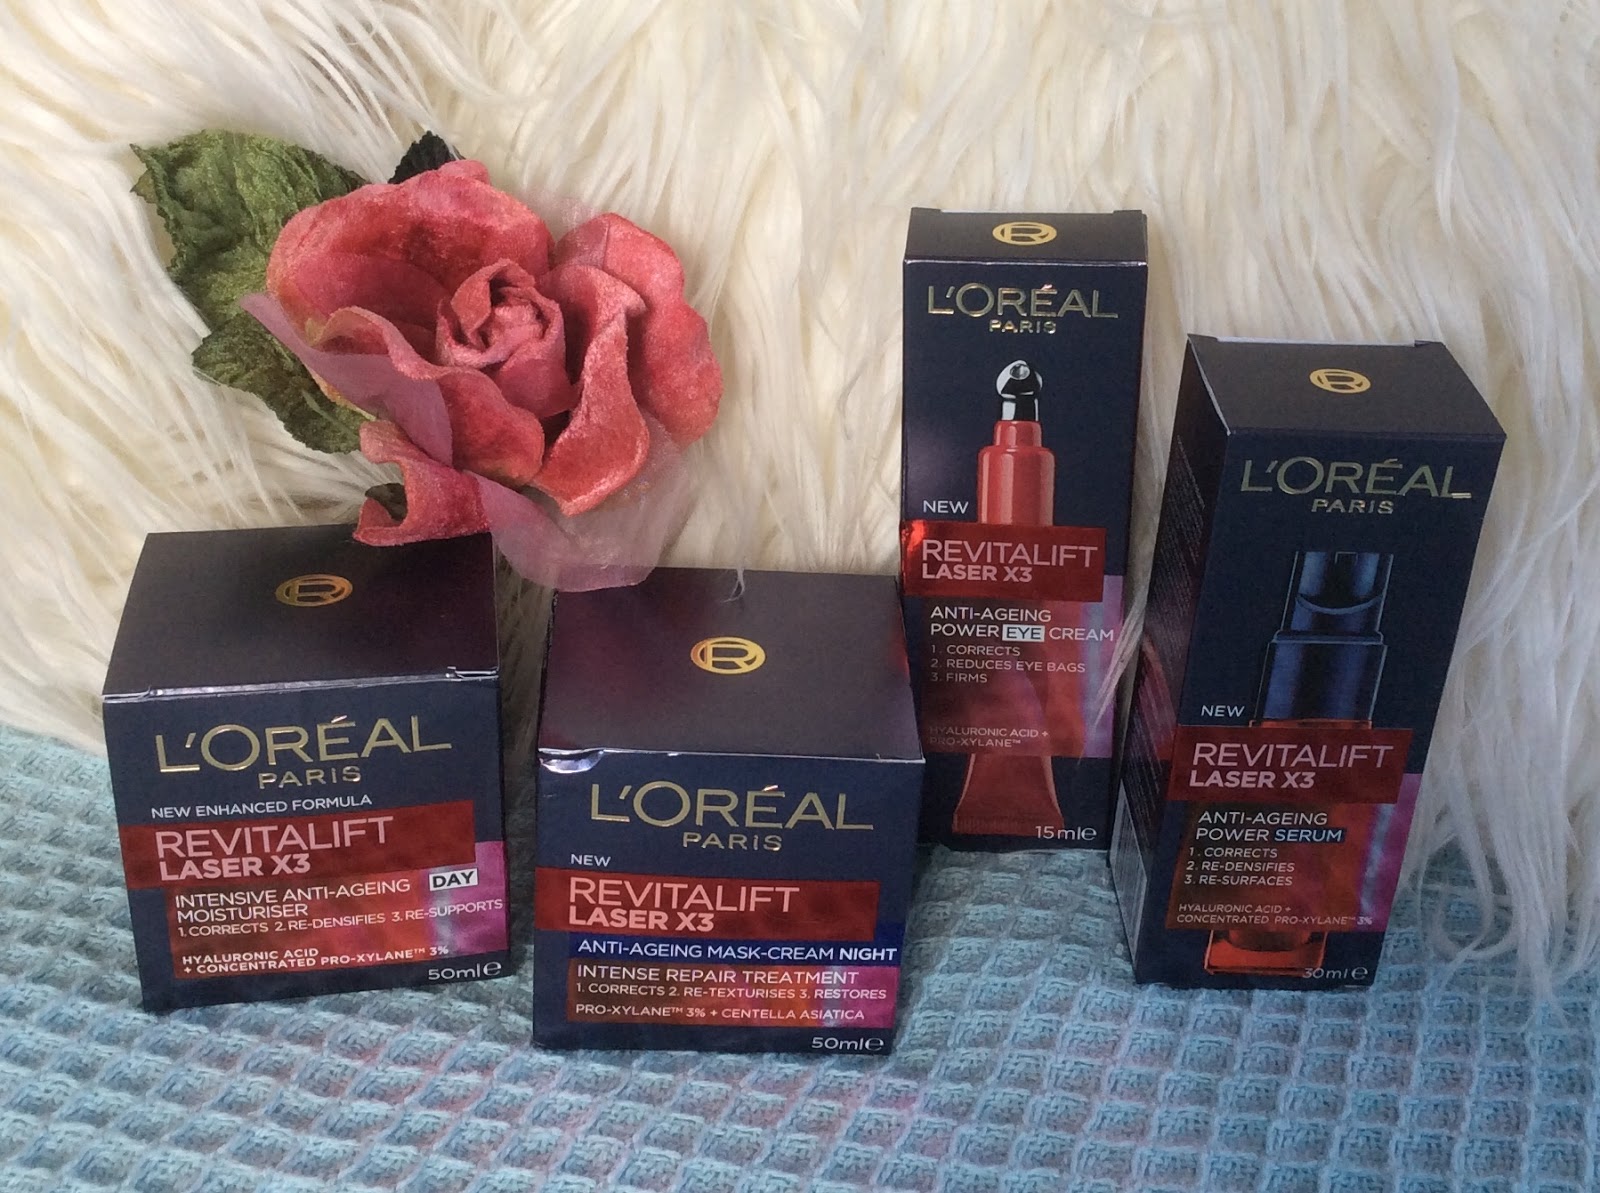 Onzuiver Editie Excentriek roseroomnz: L'Oréal Paris Revitalift Laser x3 - Intensive Anti-Ageing  Regime - My Review